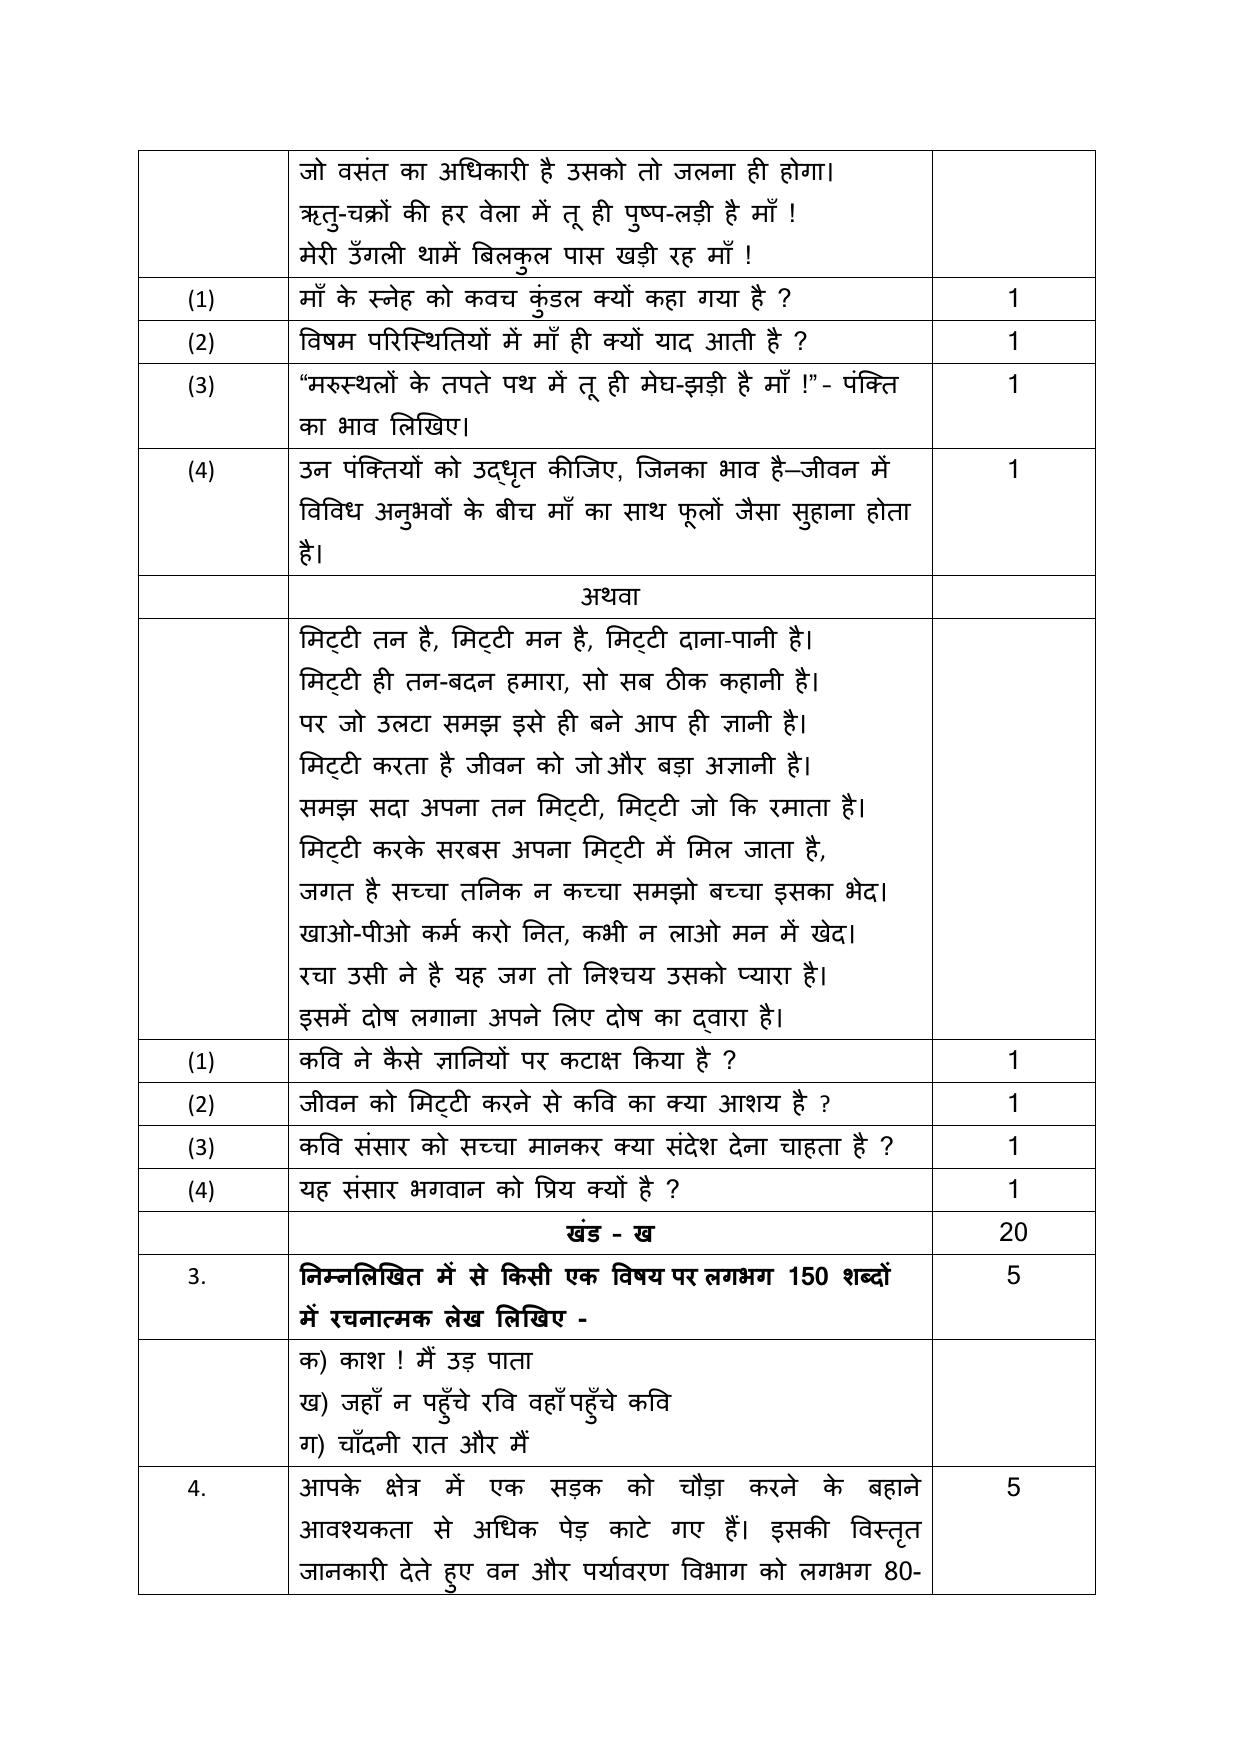 CBSE Class 12 Hindi Adhaar -Sample Paper 2019-20 - Page 3